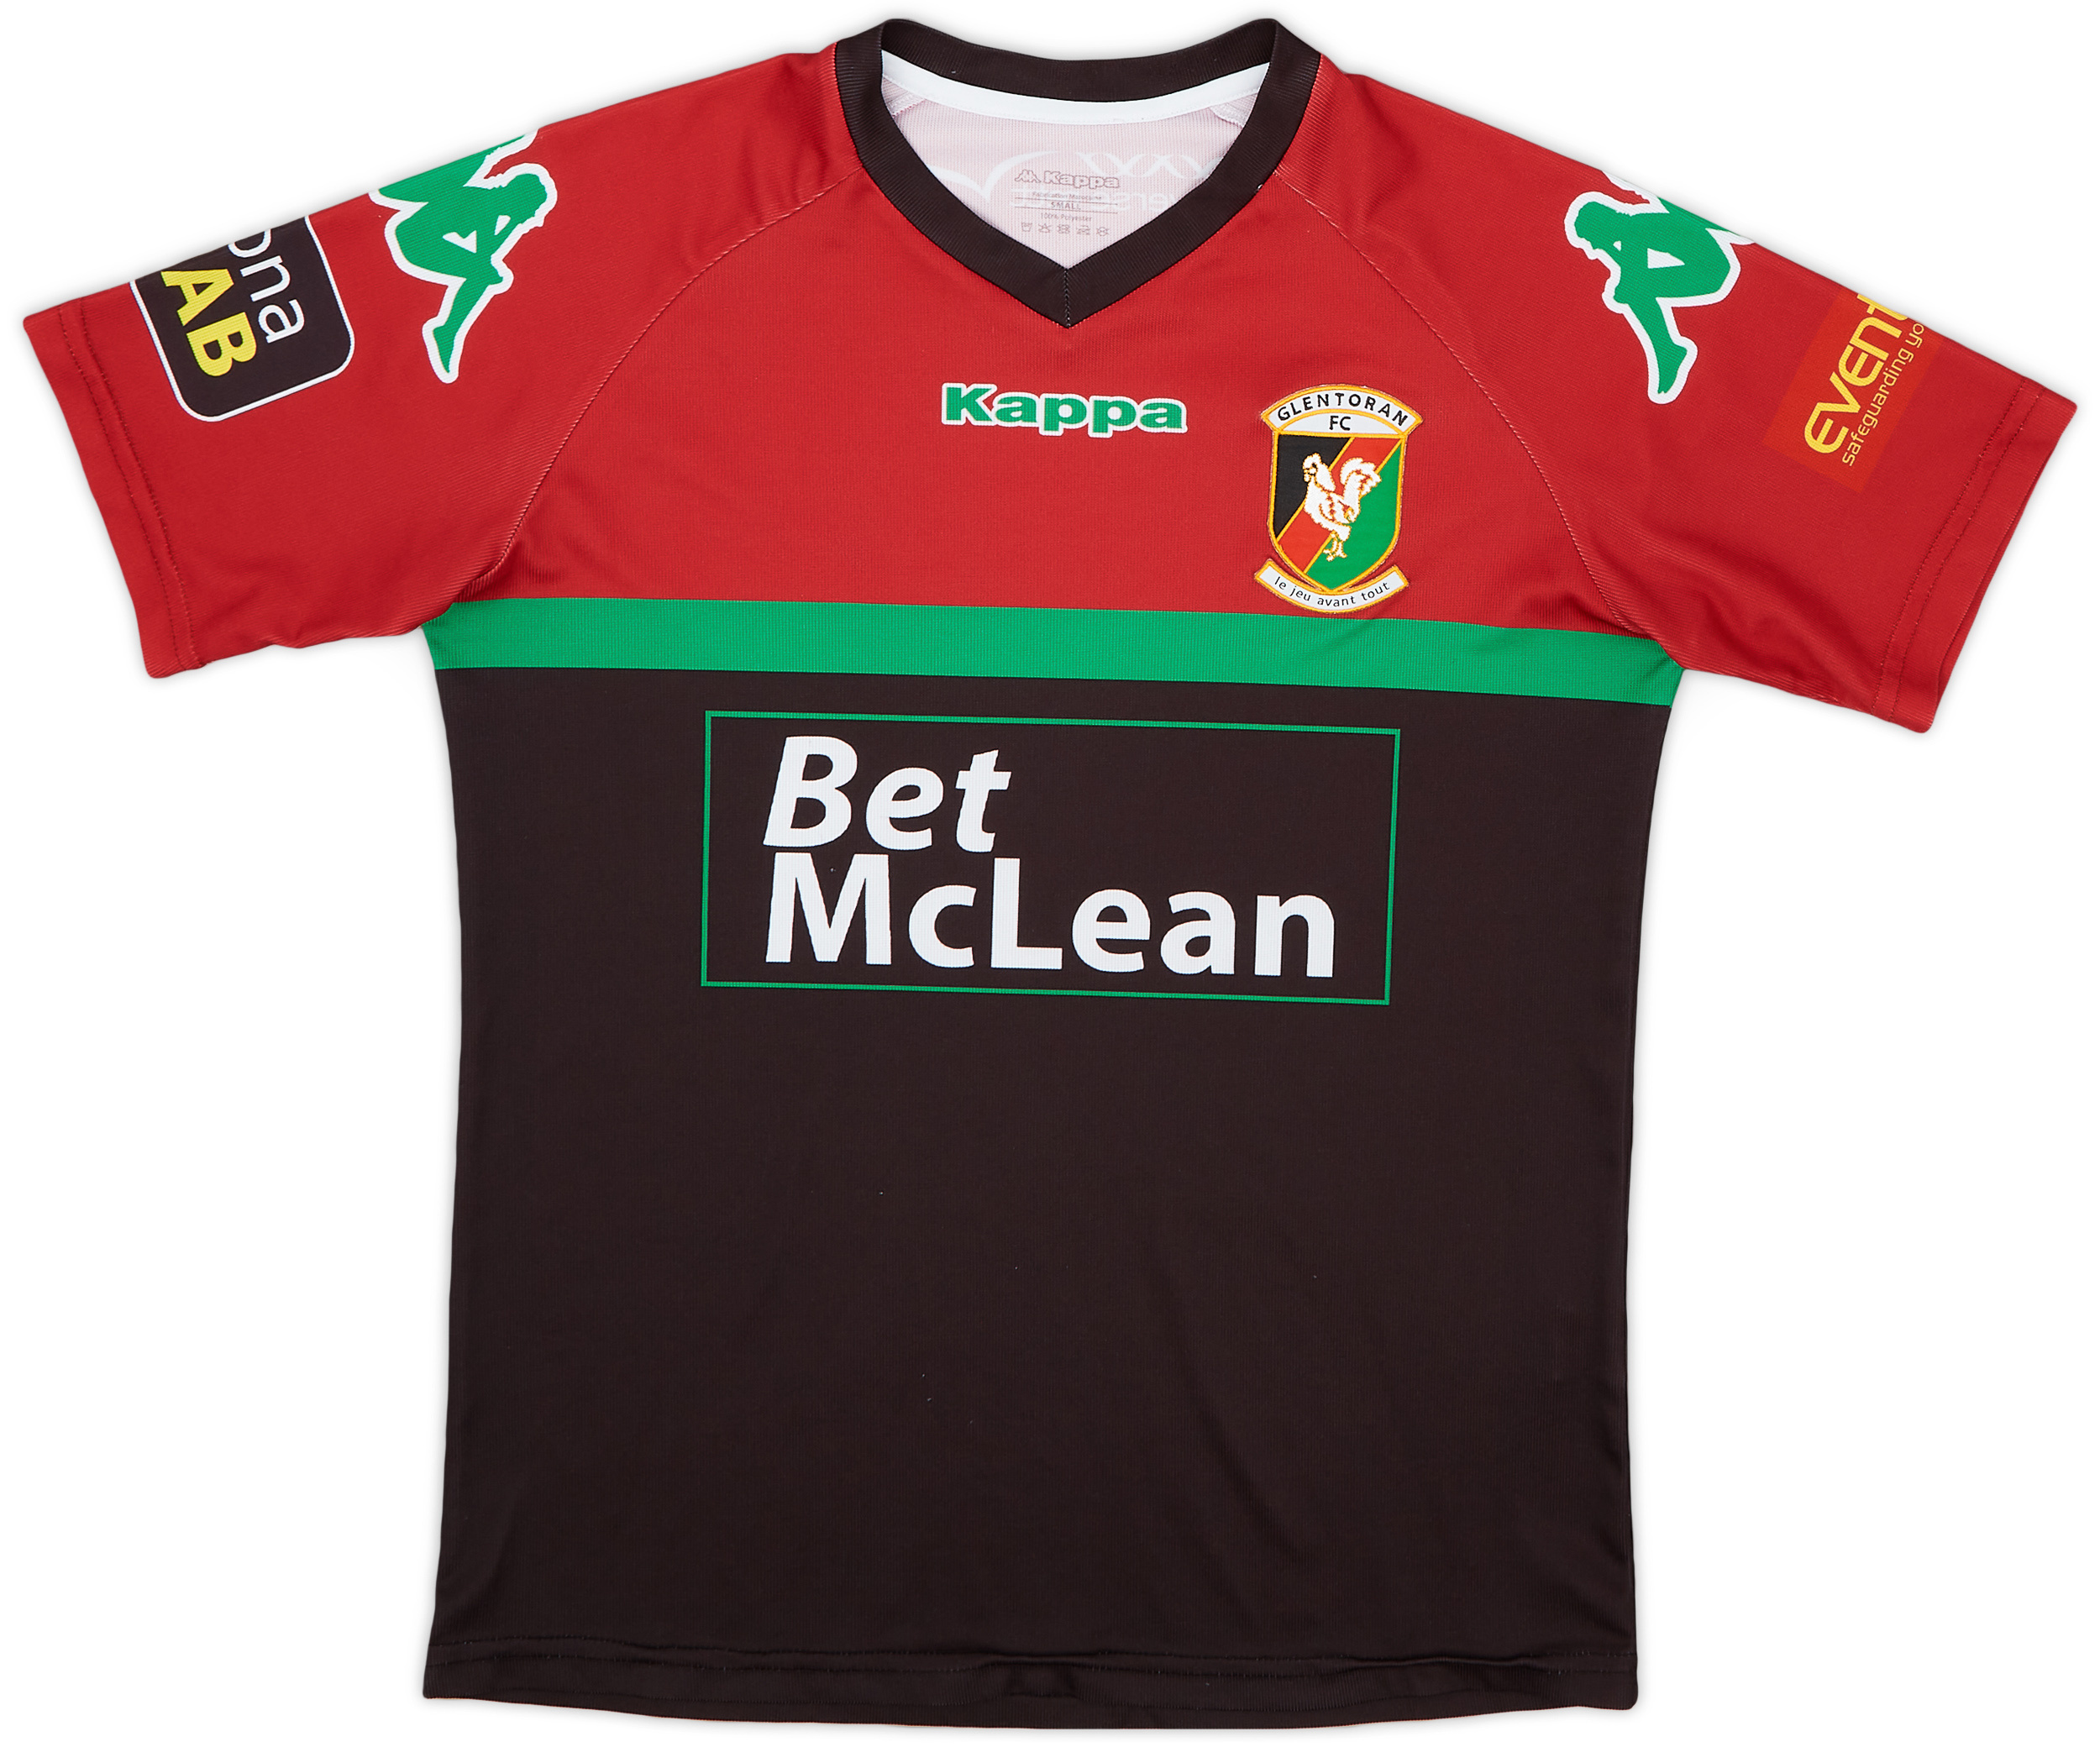 2015-16 Glentoran Away Shirt - 9/10 - ()